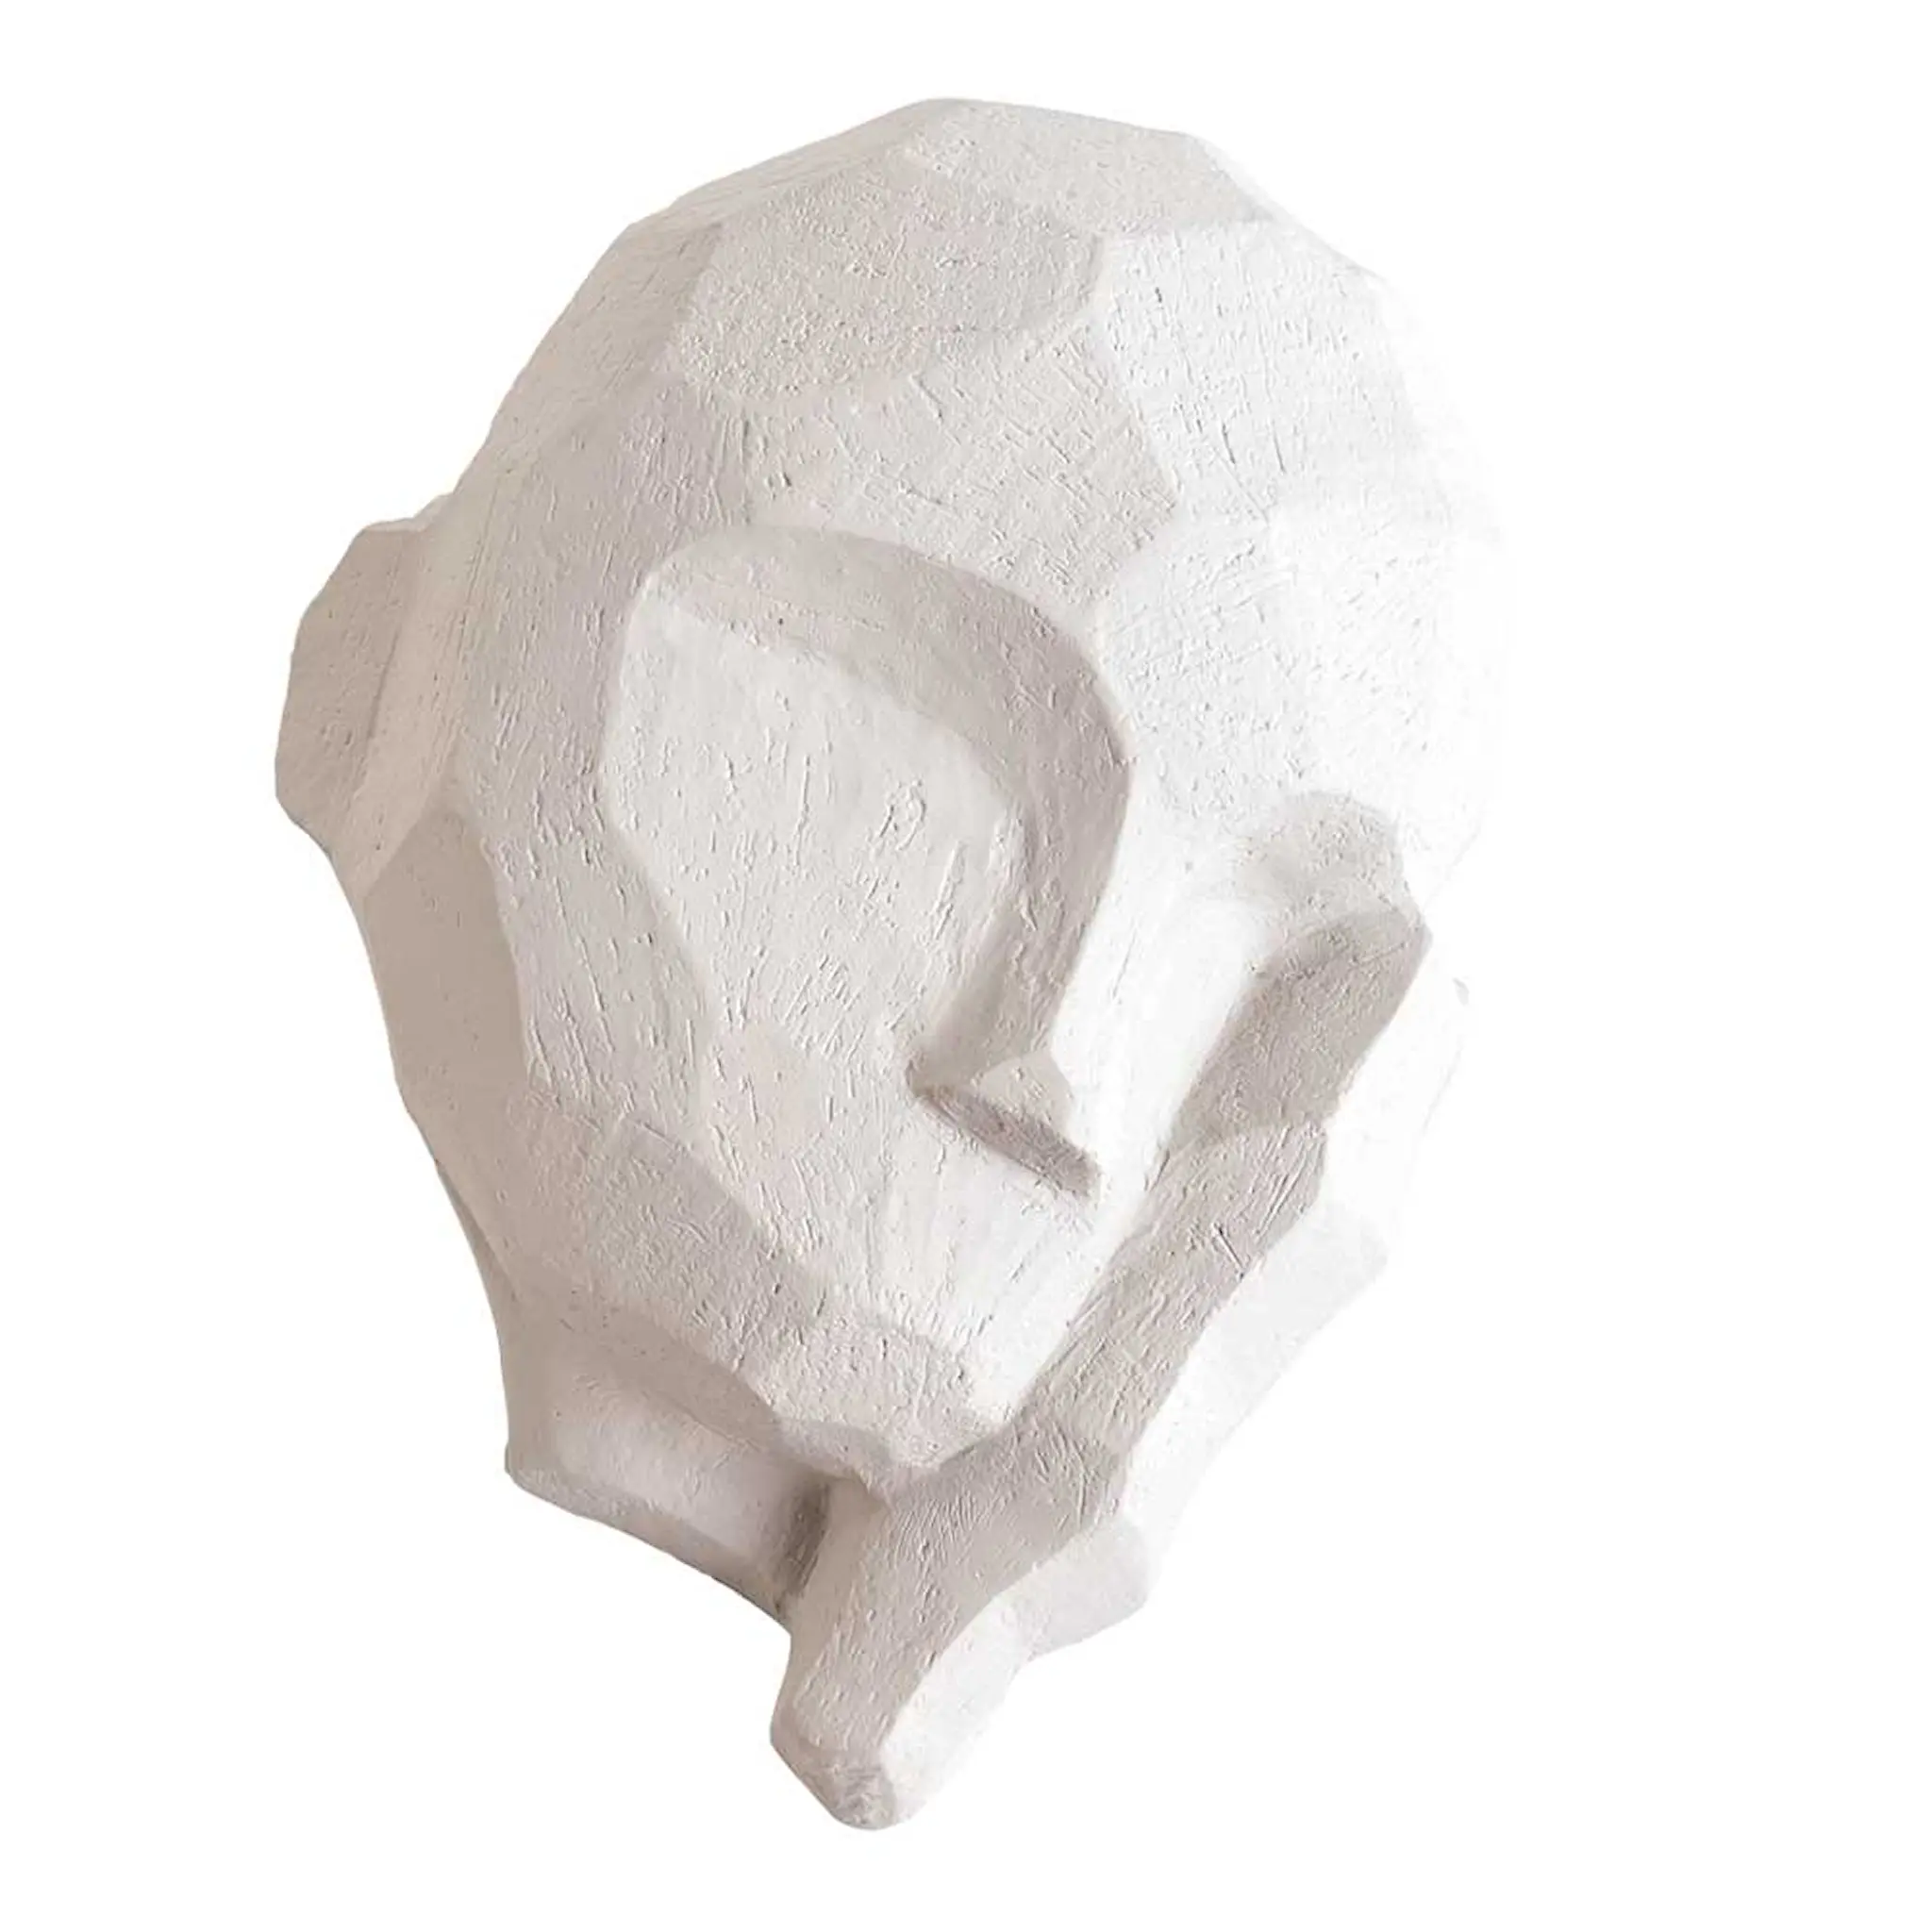 Cooee Dreamer skulptur hode i kalkstein 16x22 cm hvit